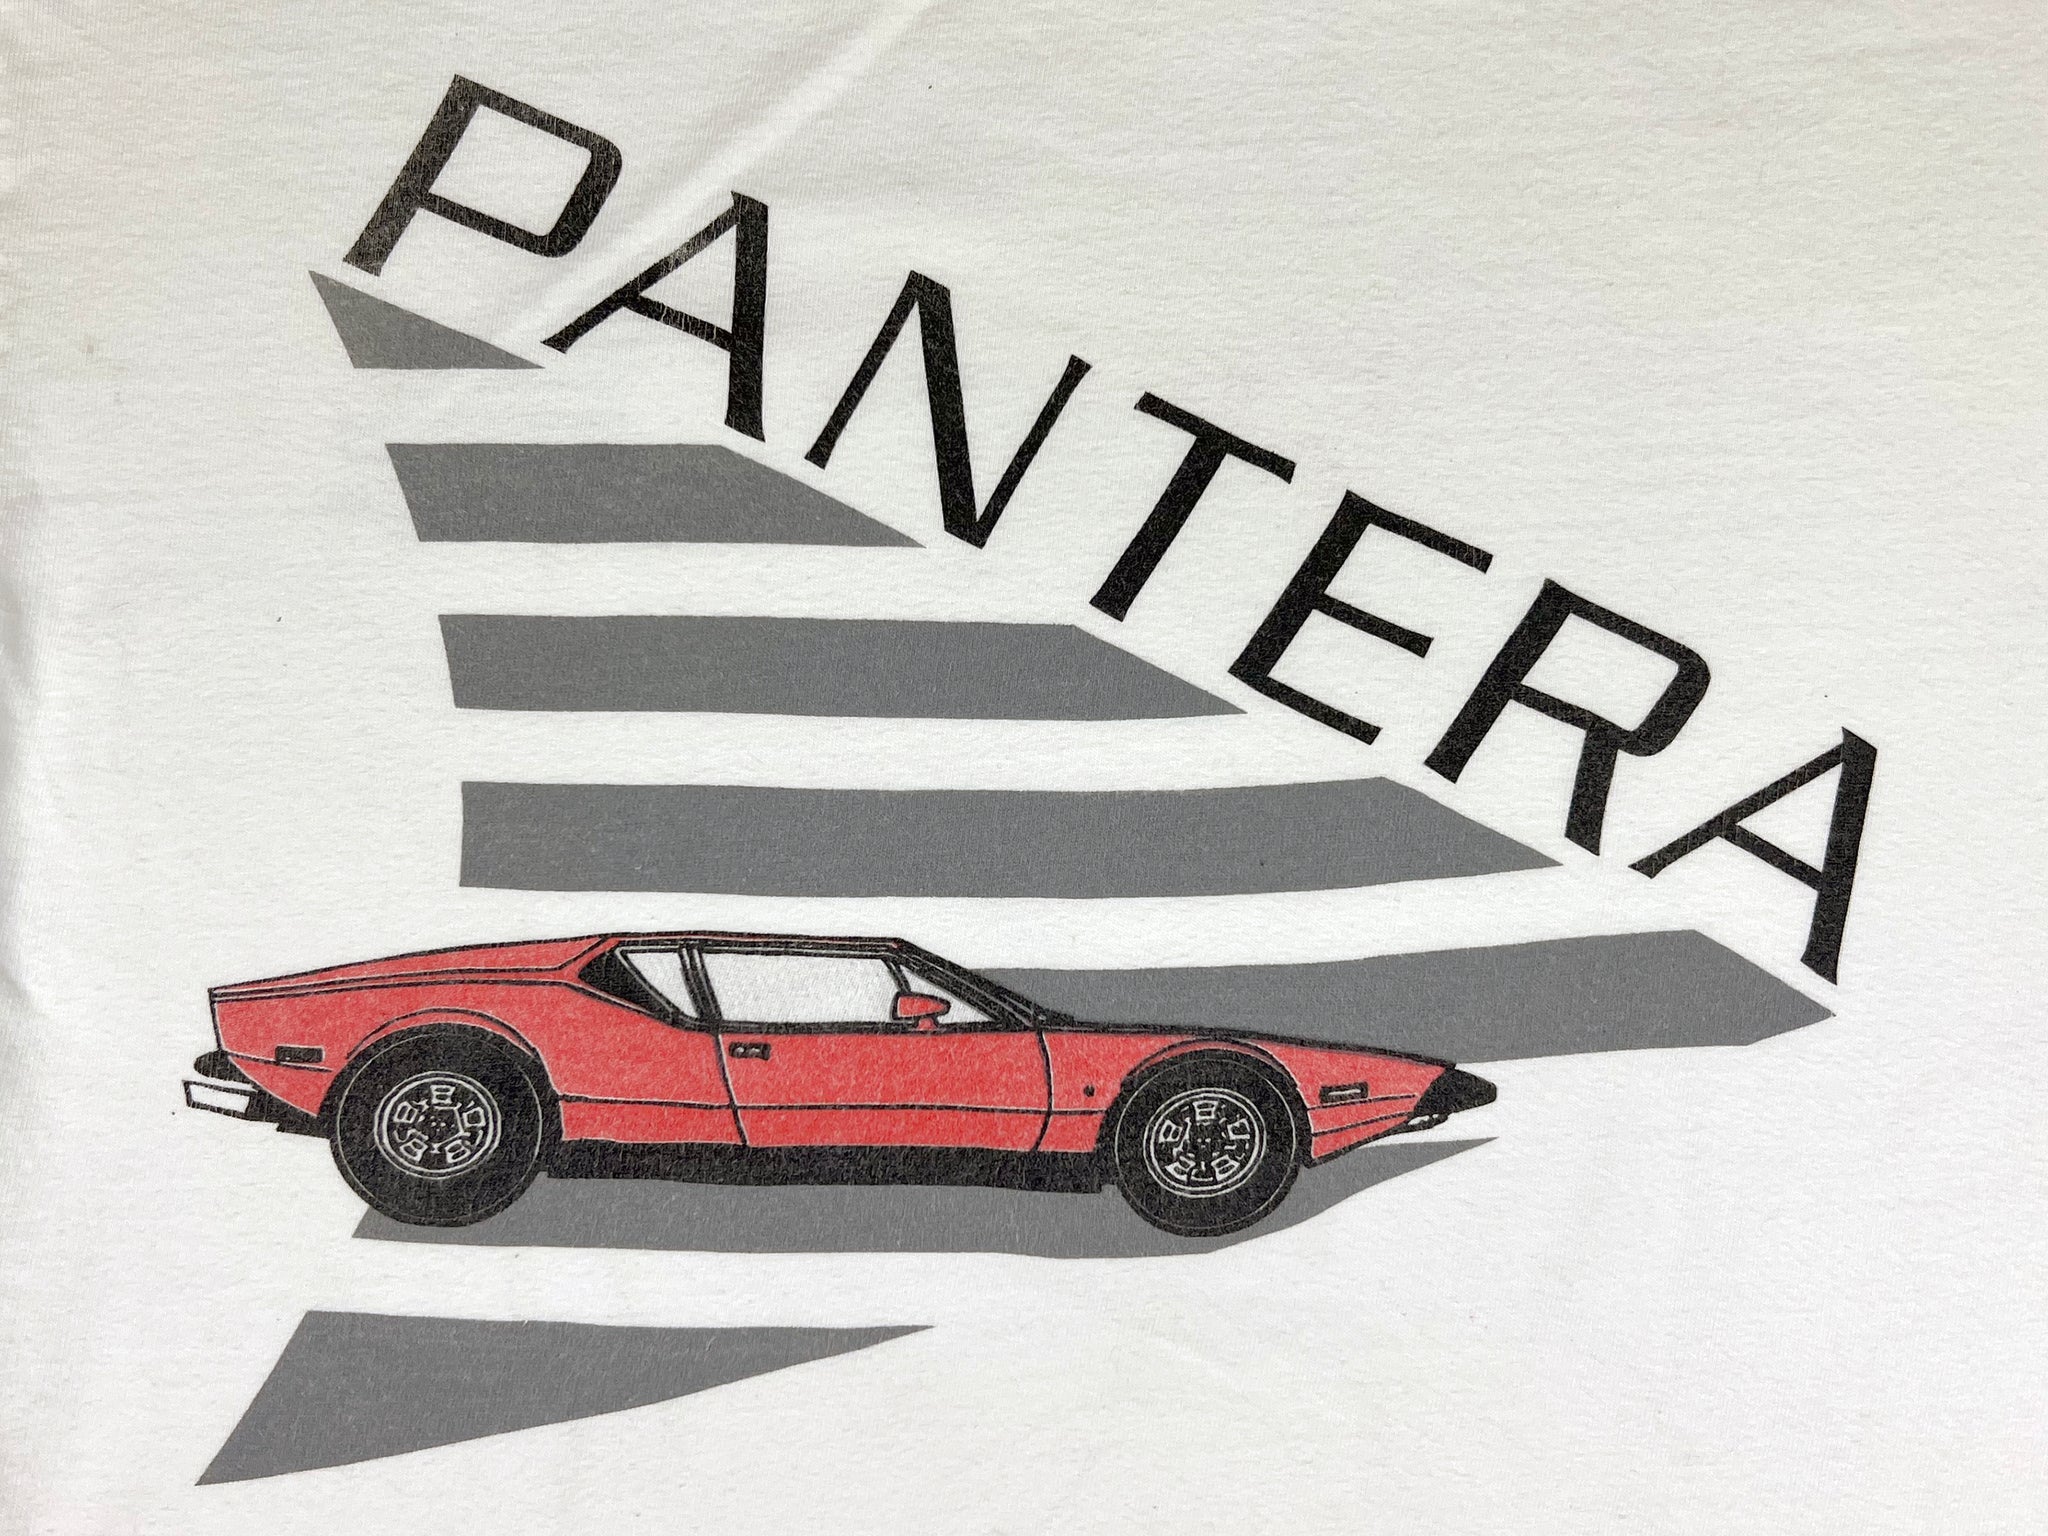 Pantera Owners Club of America T-Shirt